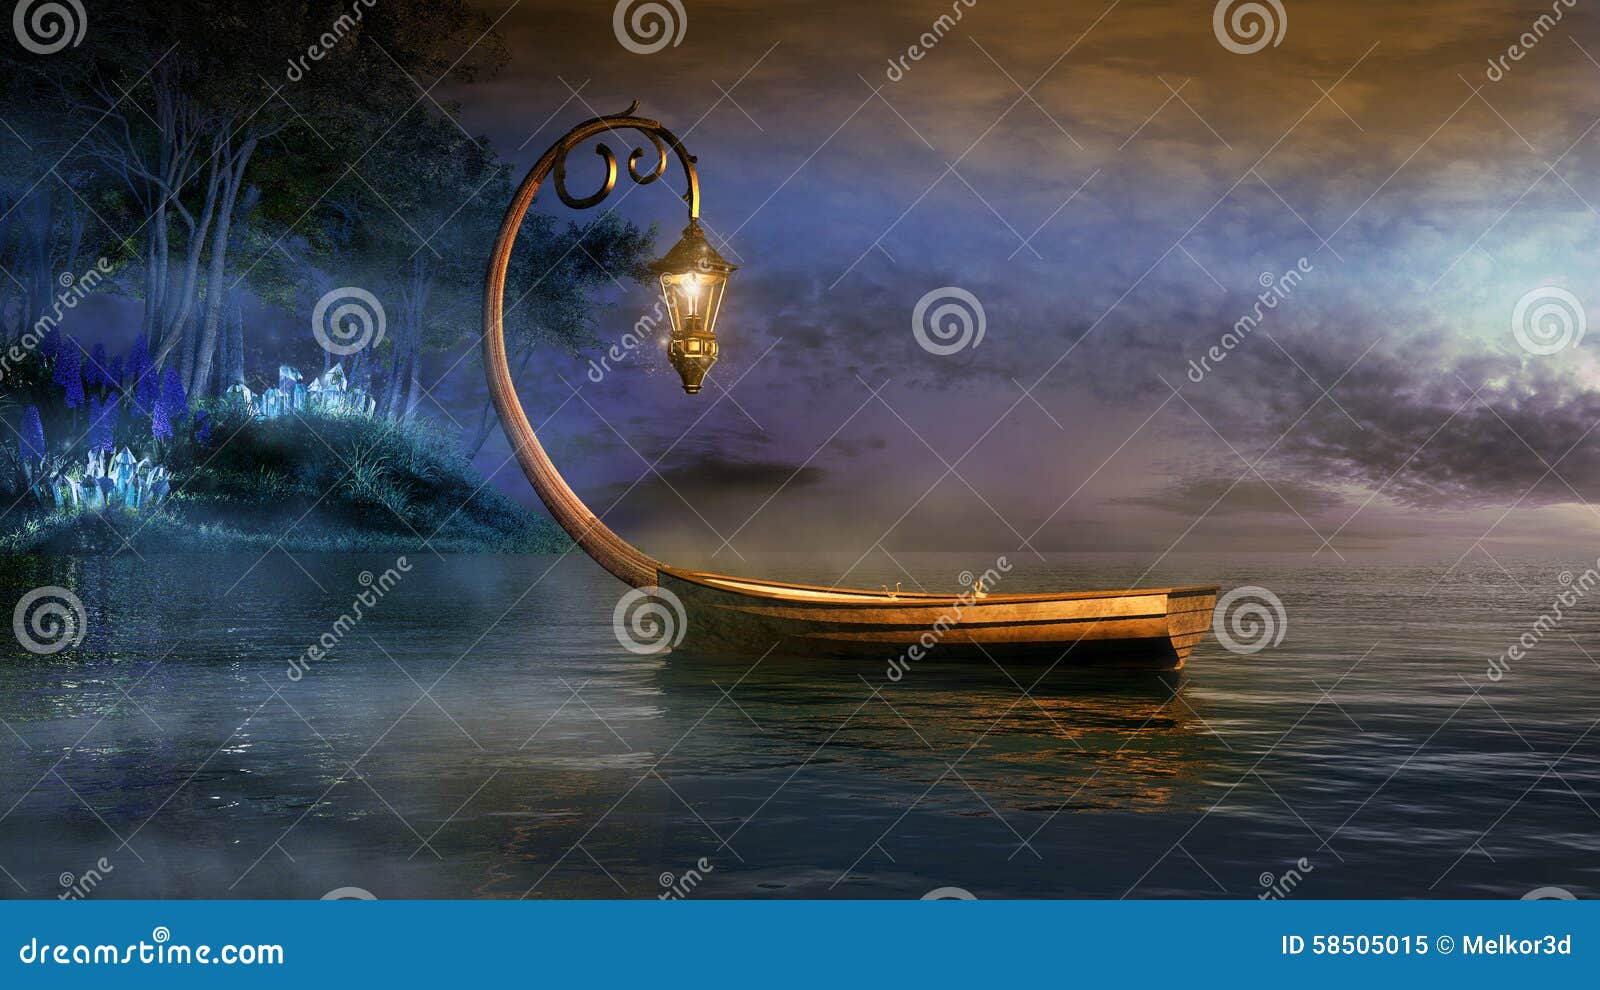 fantasy boat